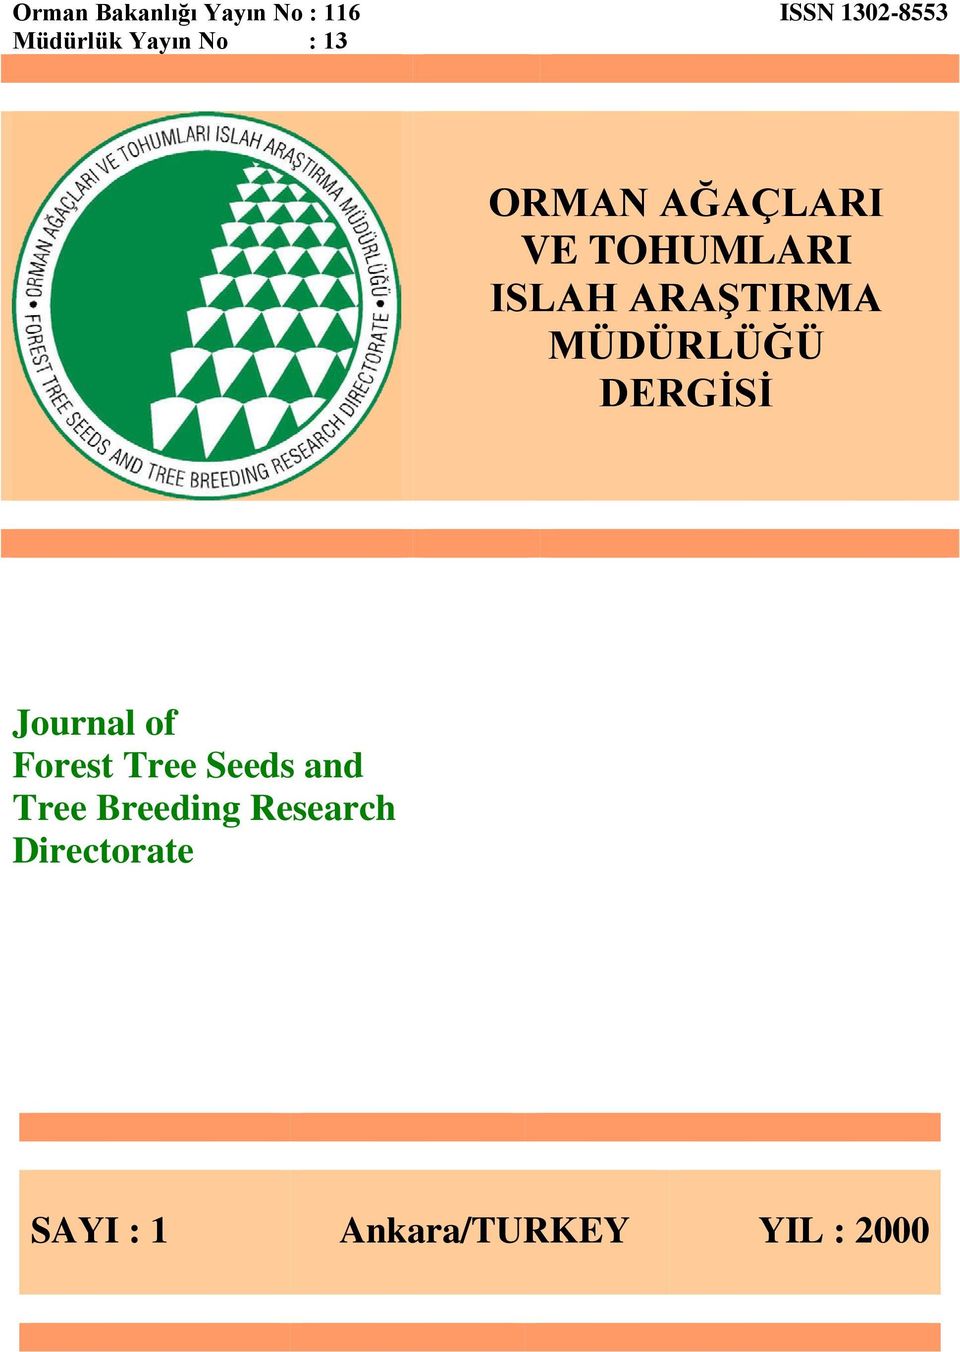 MÜDÜRLÜĞÜ DERGİSİ Journal of Forest Tree Seeds and Tree